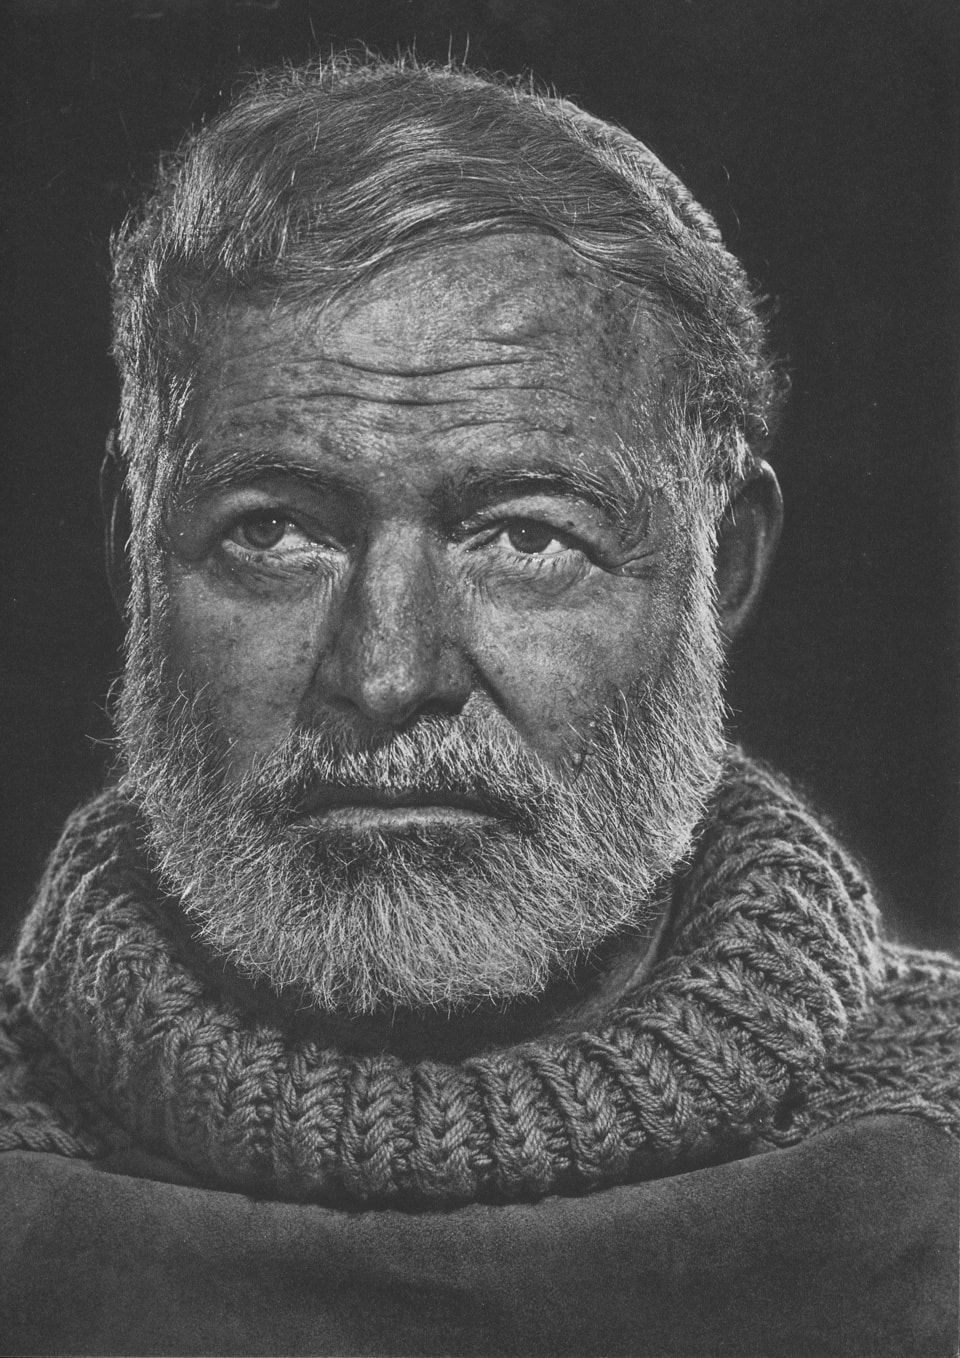 Ernest Hemingway by Yousuf Karsh, 1957